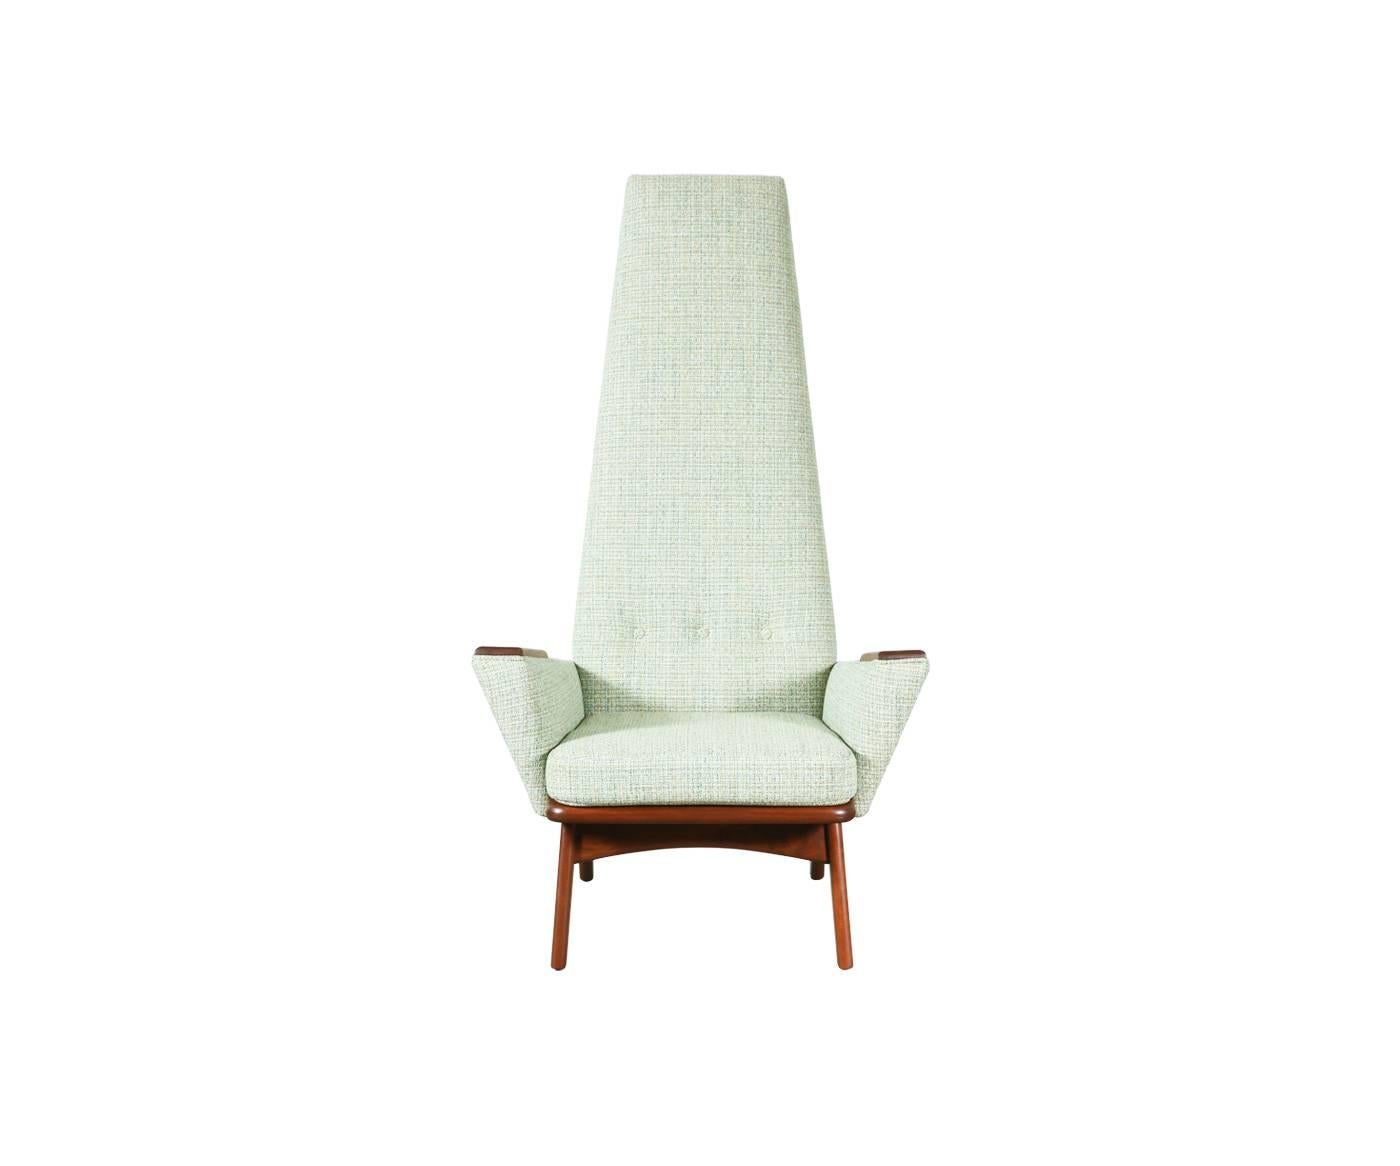 Mid-Century Modern Adrian Pearsall “Slim Jim” High Back Chair for Craft Associates